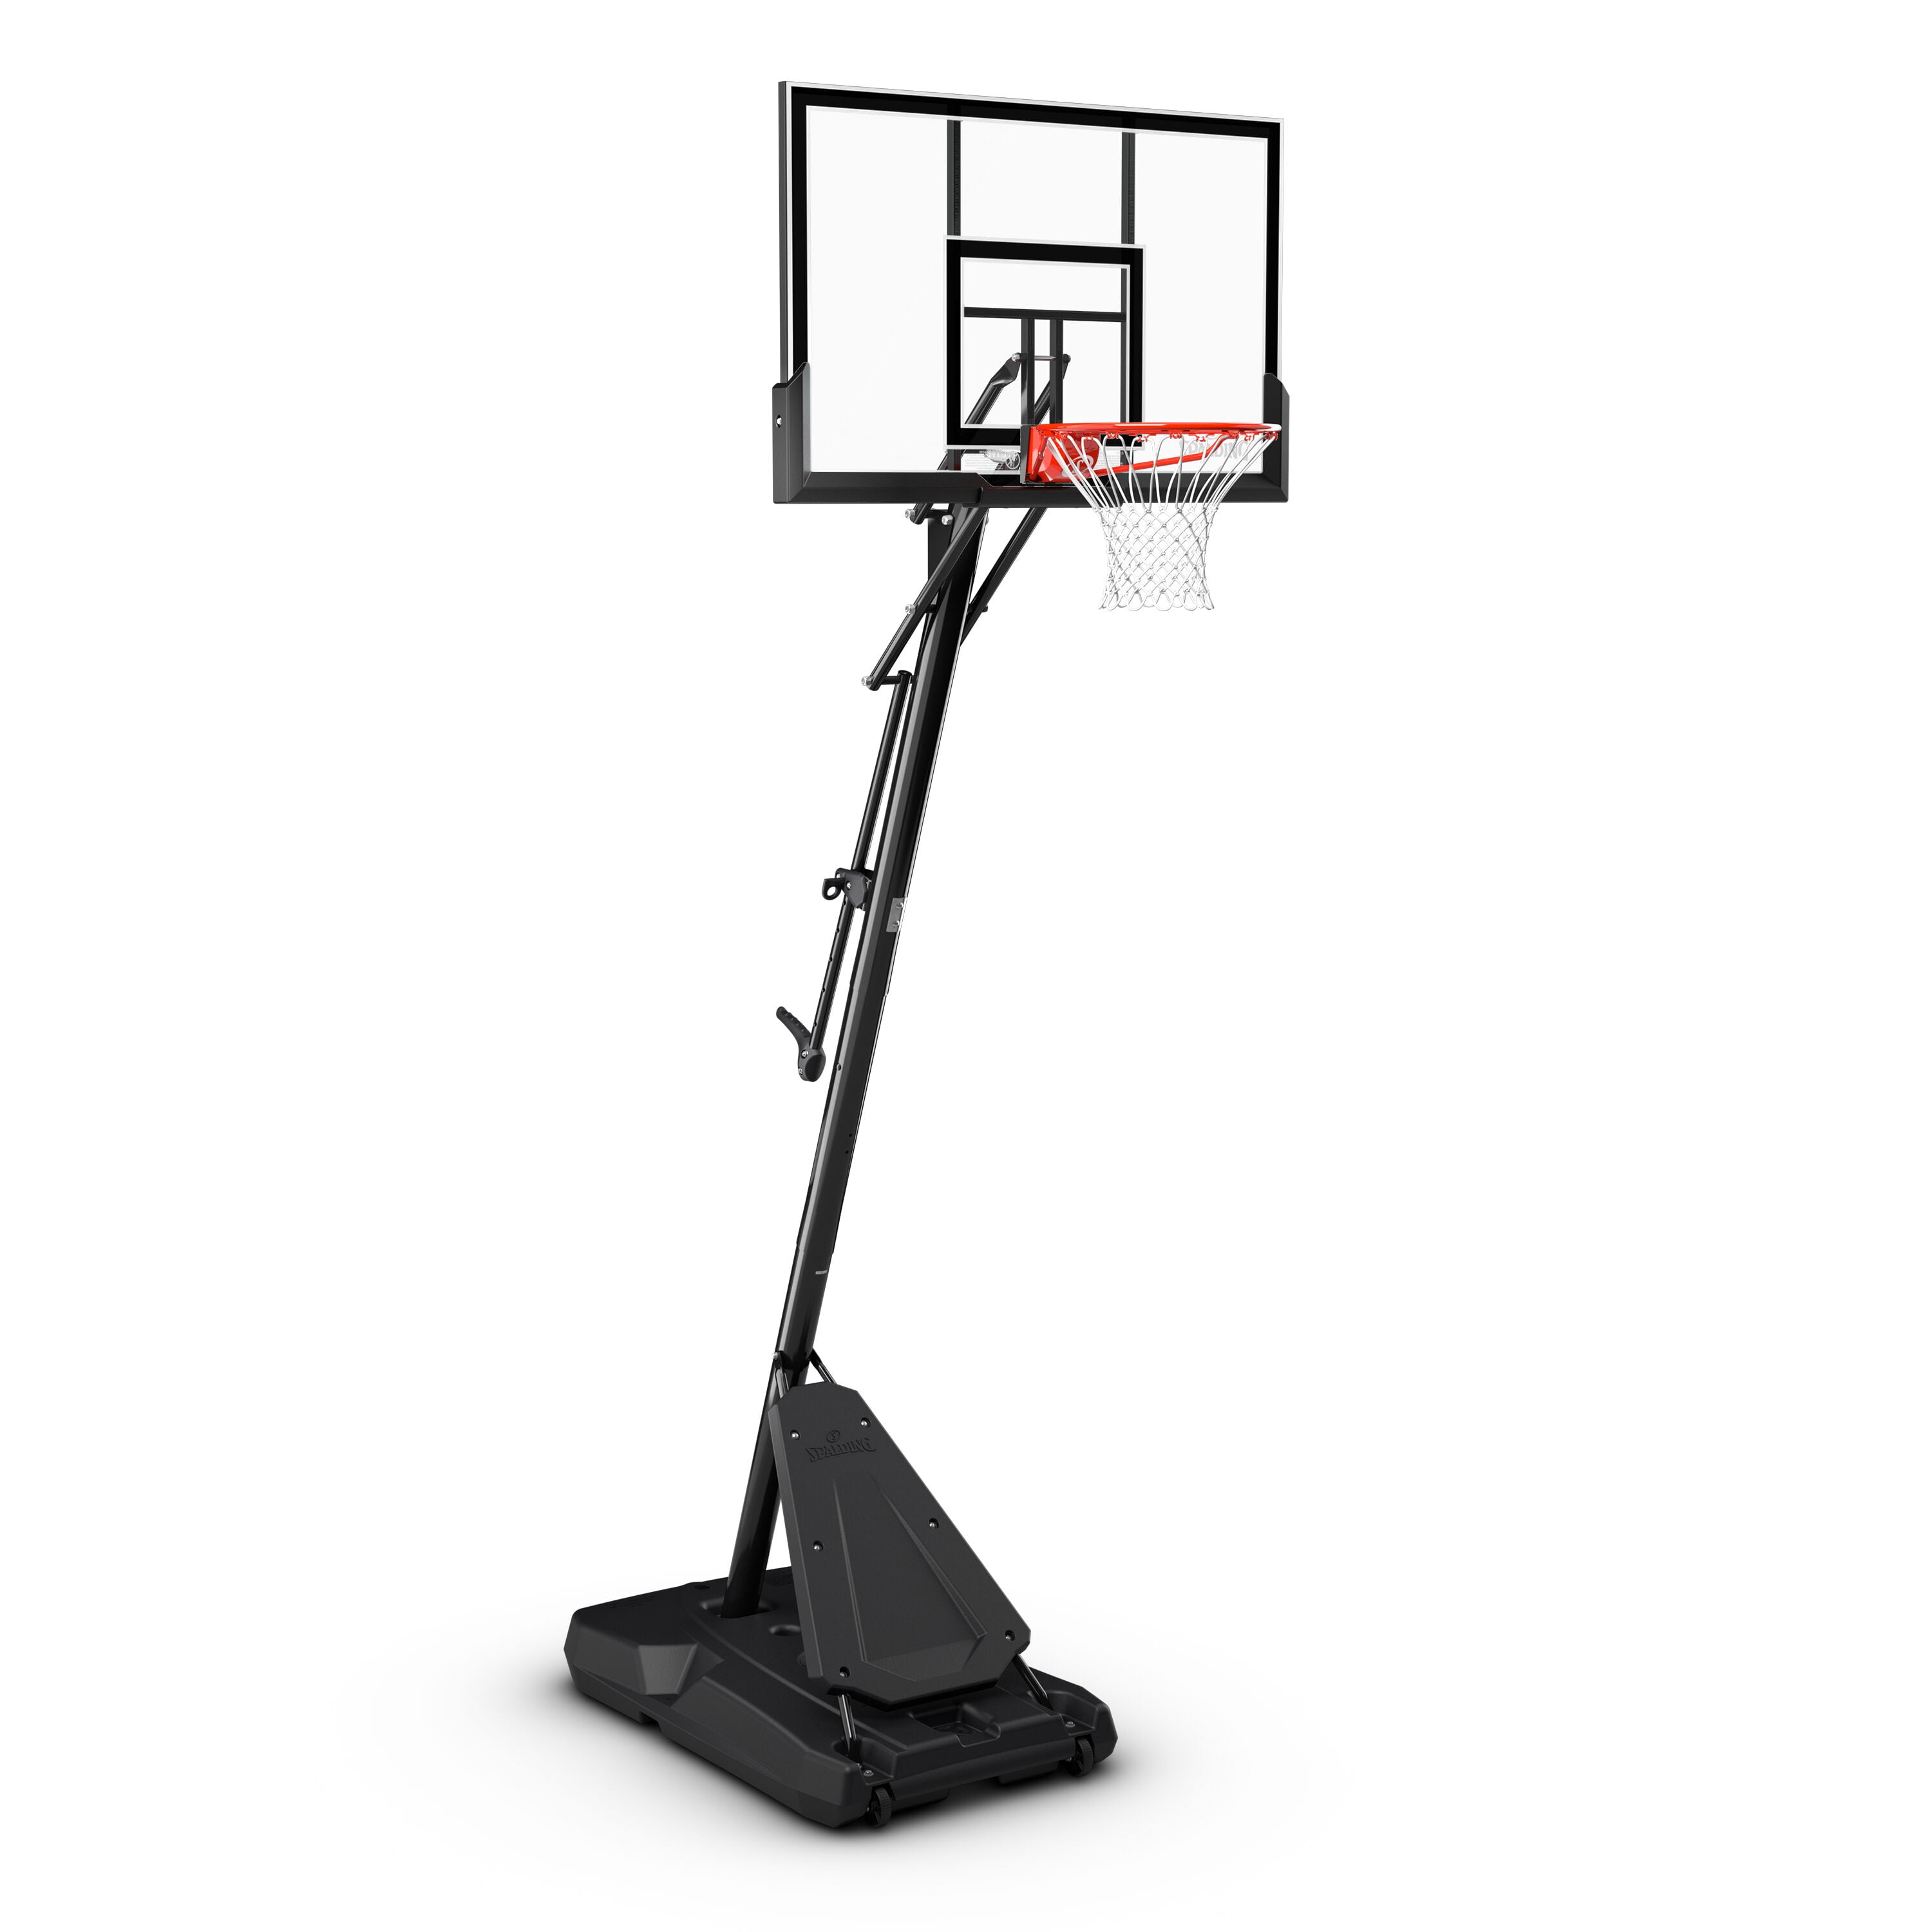 Spalding Basket Goal Slam Jam Backboard 56099cn From Japan for sale online 